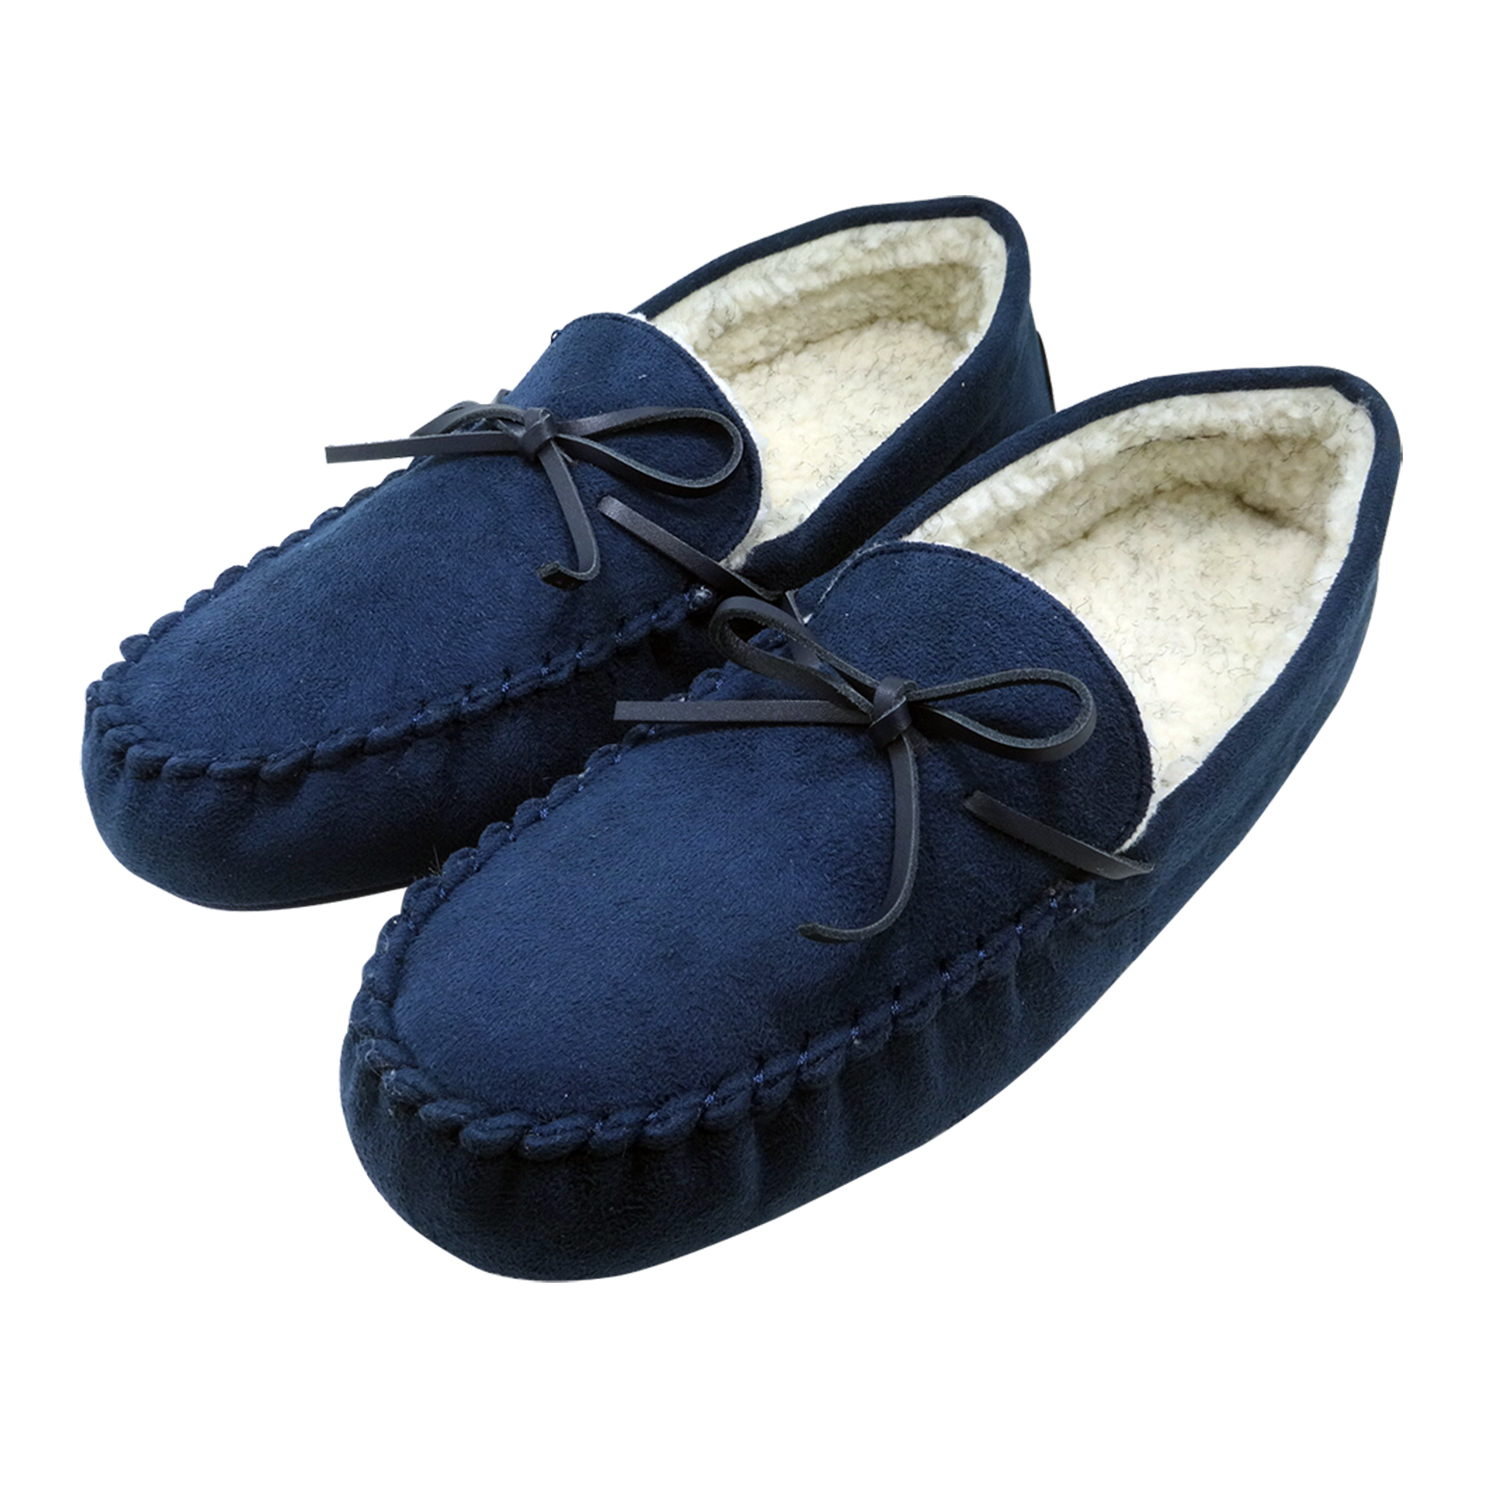 Men's Navy Warmly Winter Microsuede Slipper Shoes